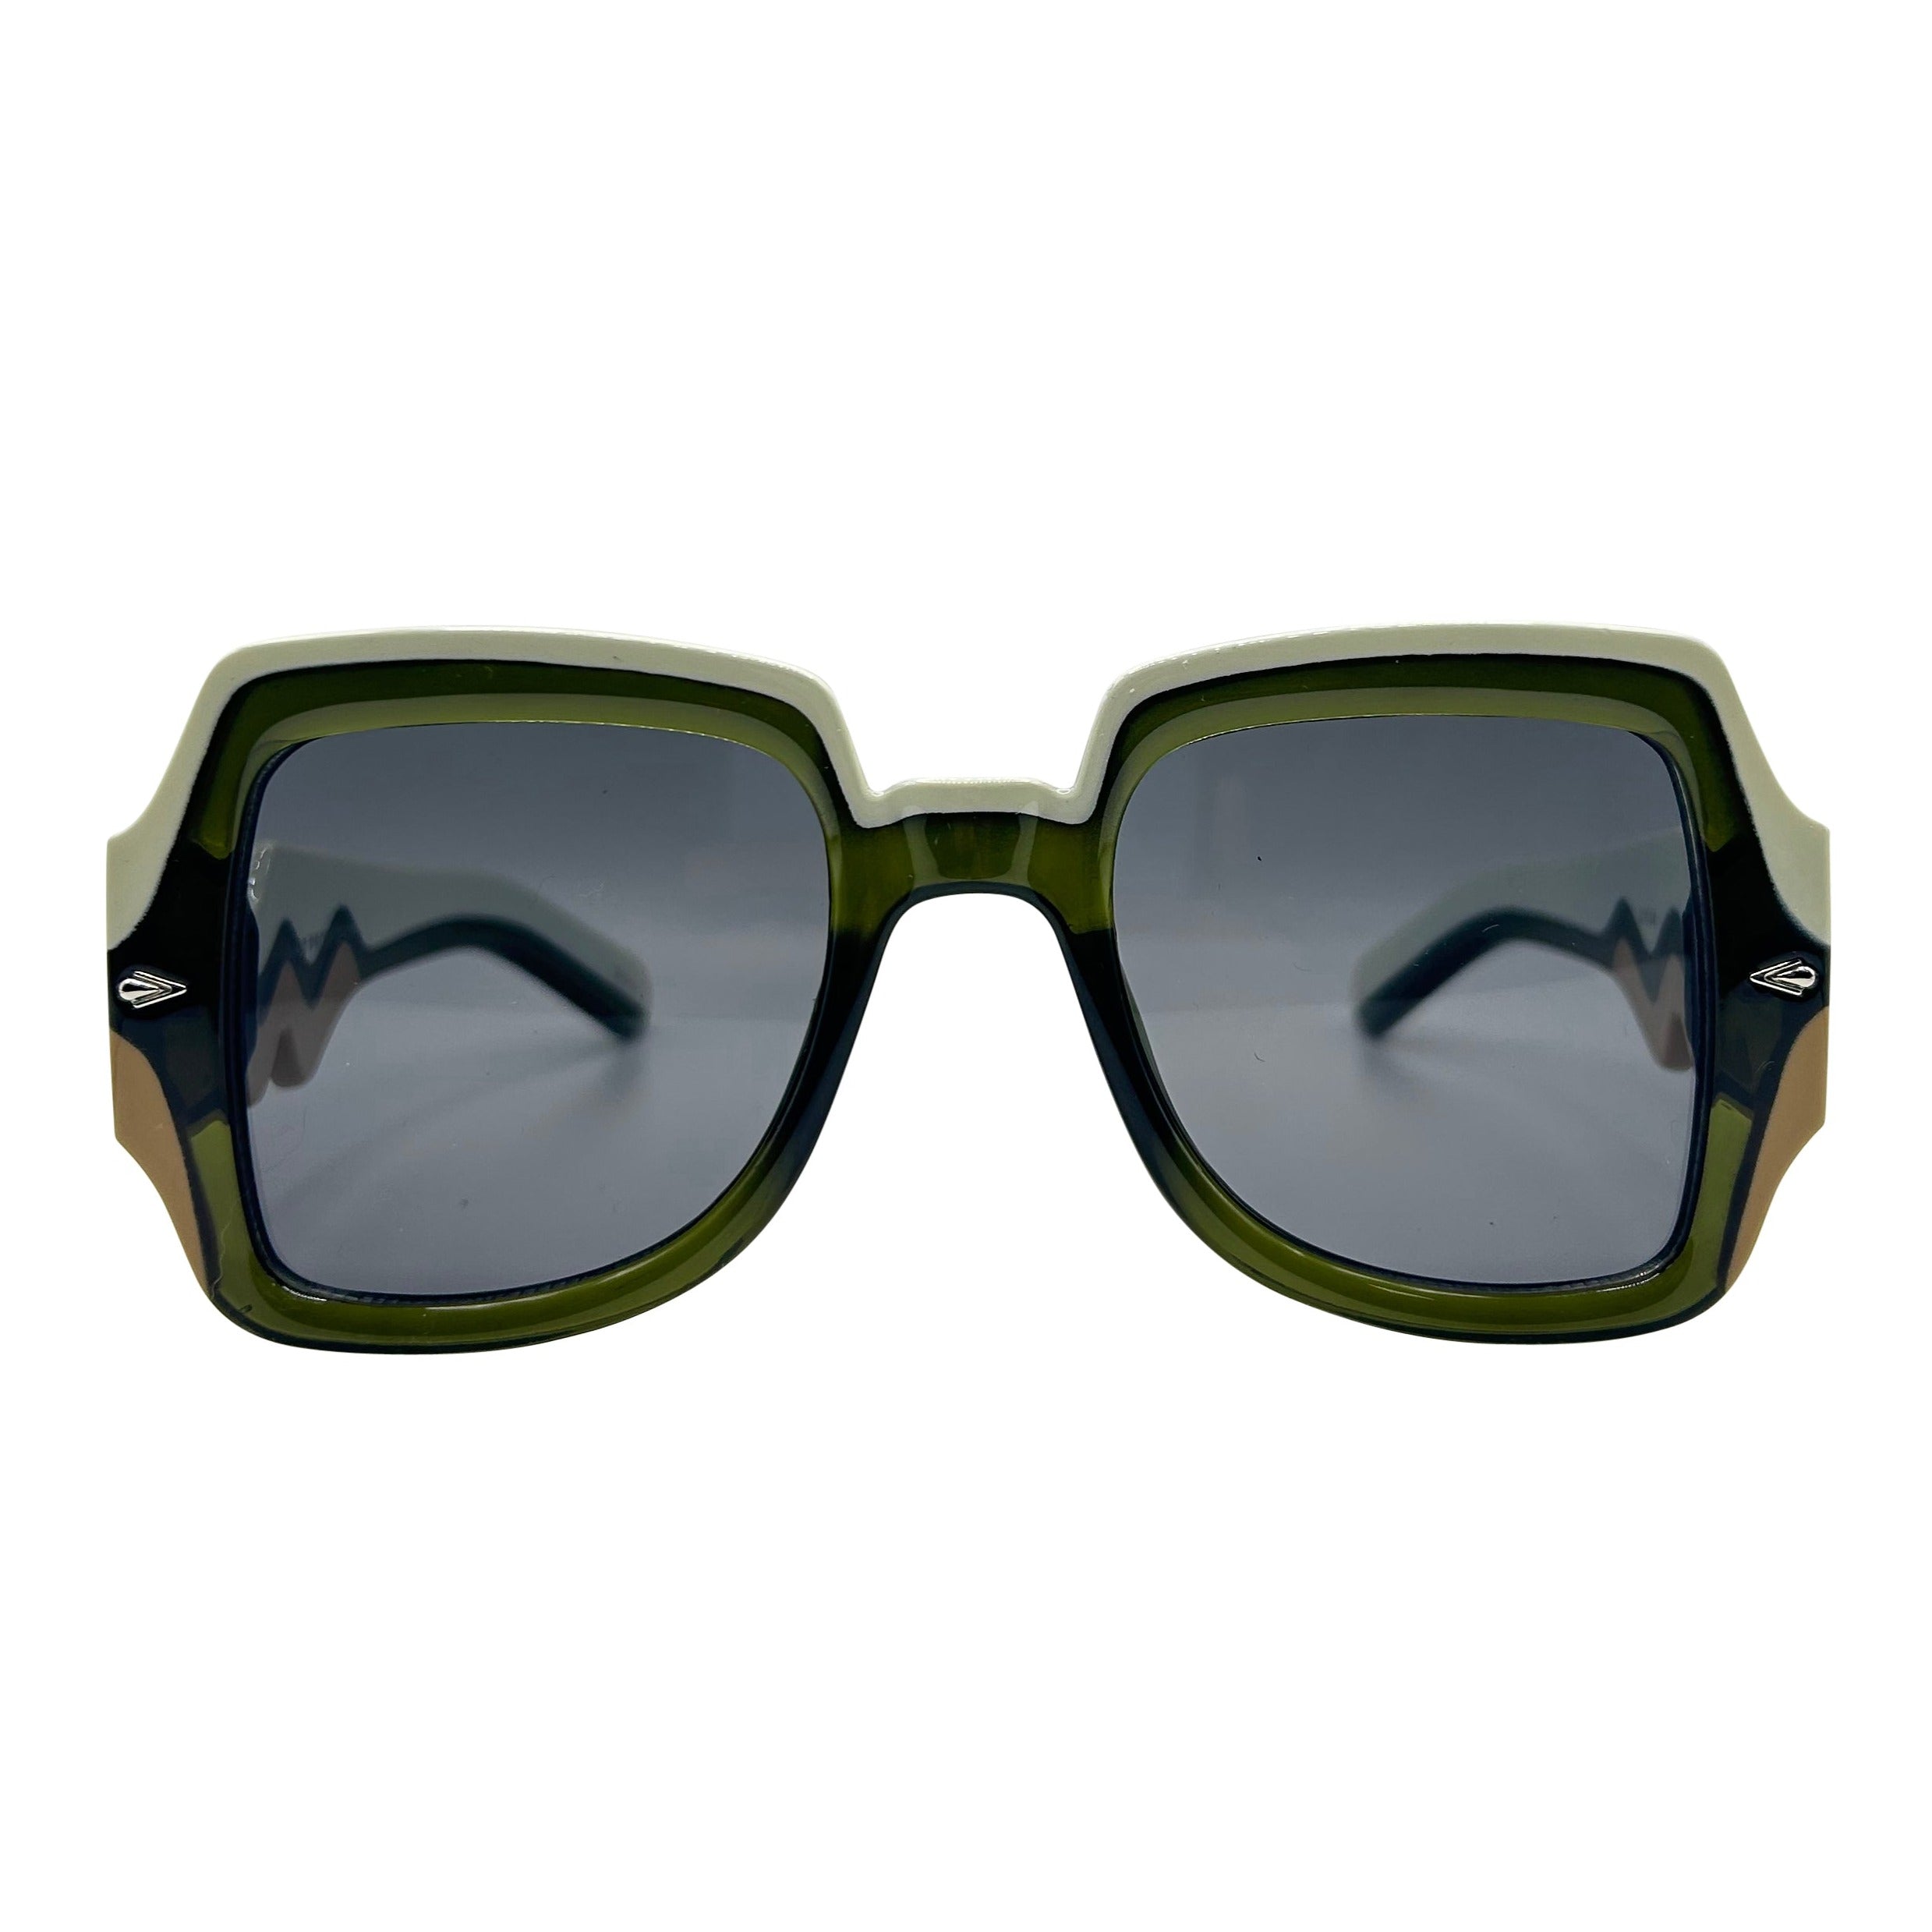 Buy Pro Acme Retro Small Round Polarized Sunglasses for Men Women John  Lennon Style (Gold Frame/Black Lens) at Amazon.in